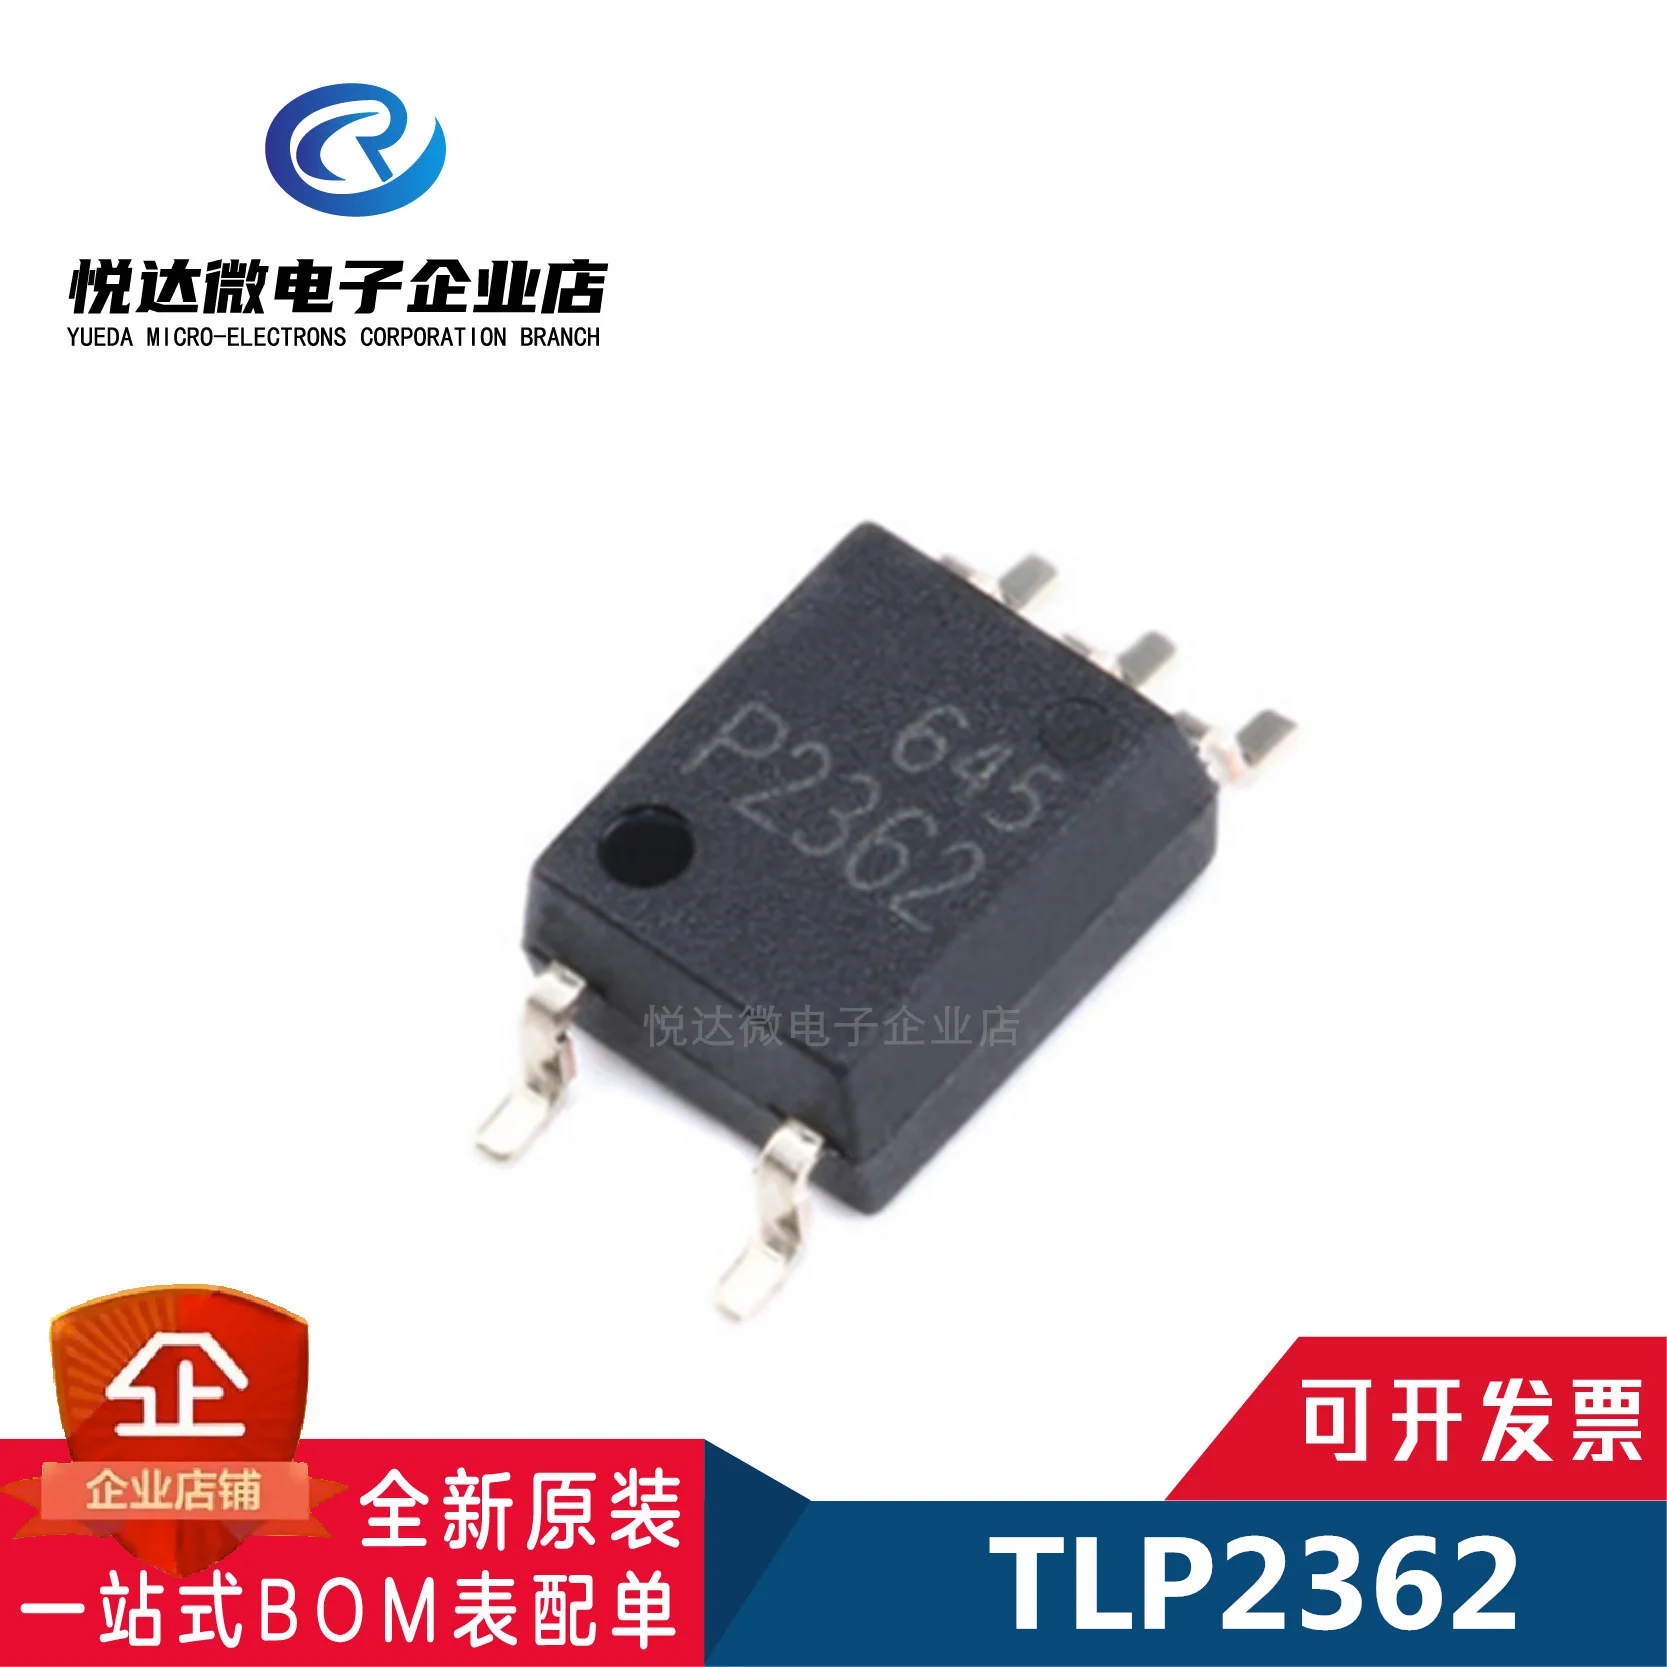 

10pcs new original TLP2362 SOP-5 chip, high-speed optocoupler, optocoupler, imported P2362